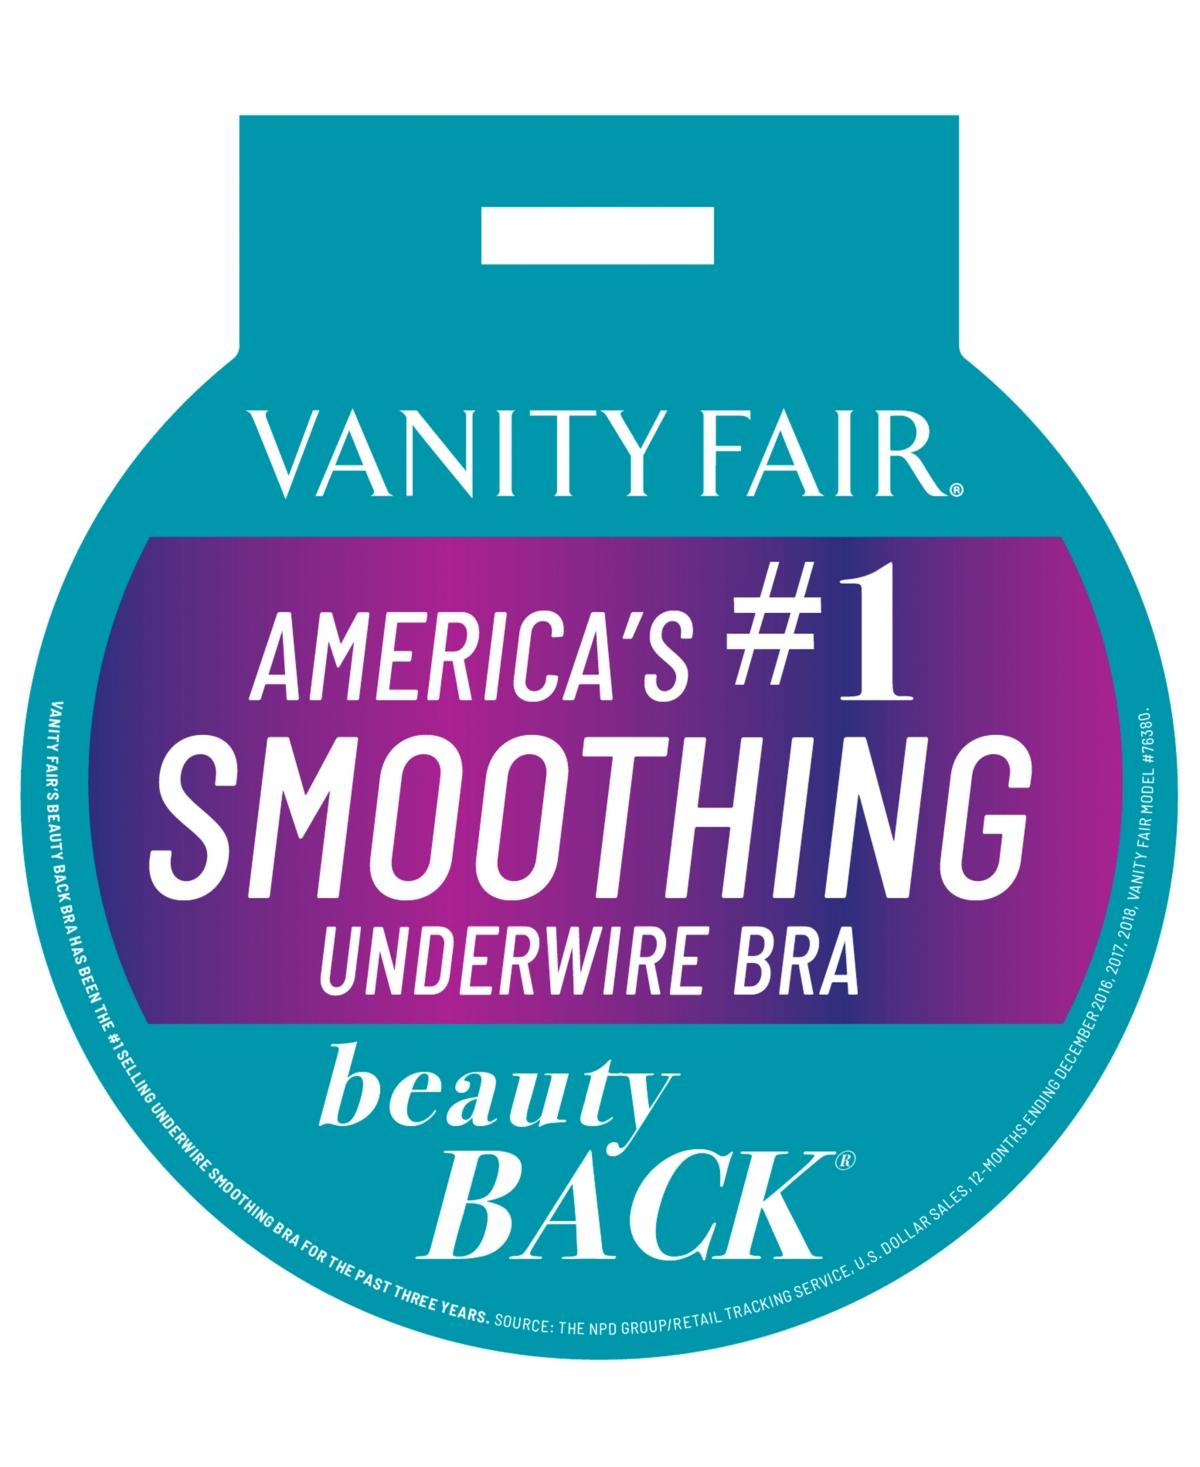 Vanity Fair Beauty Back Smoothing Full-figure Contour Bra 76380 in Blue